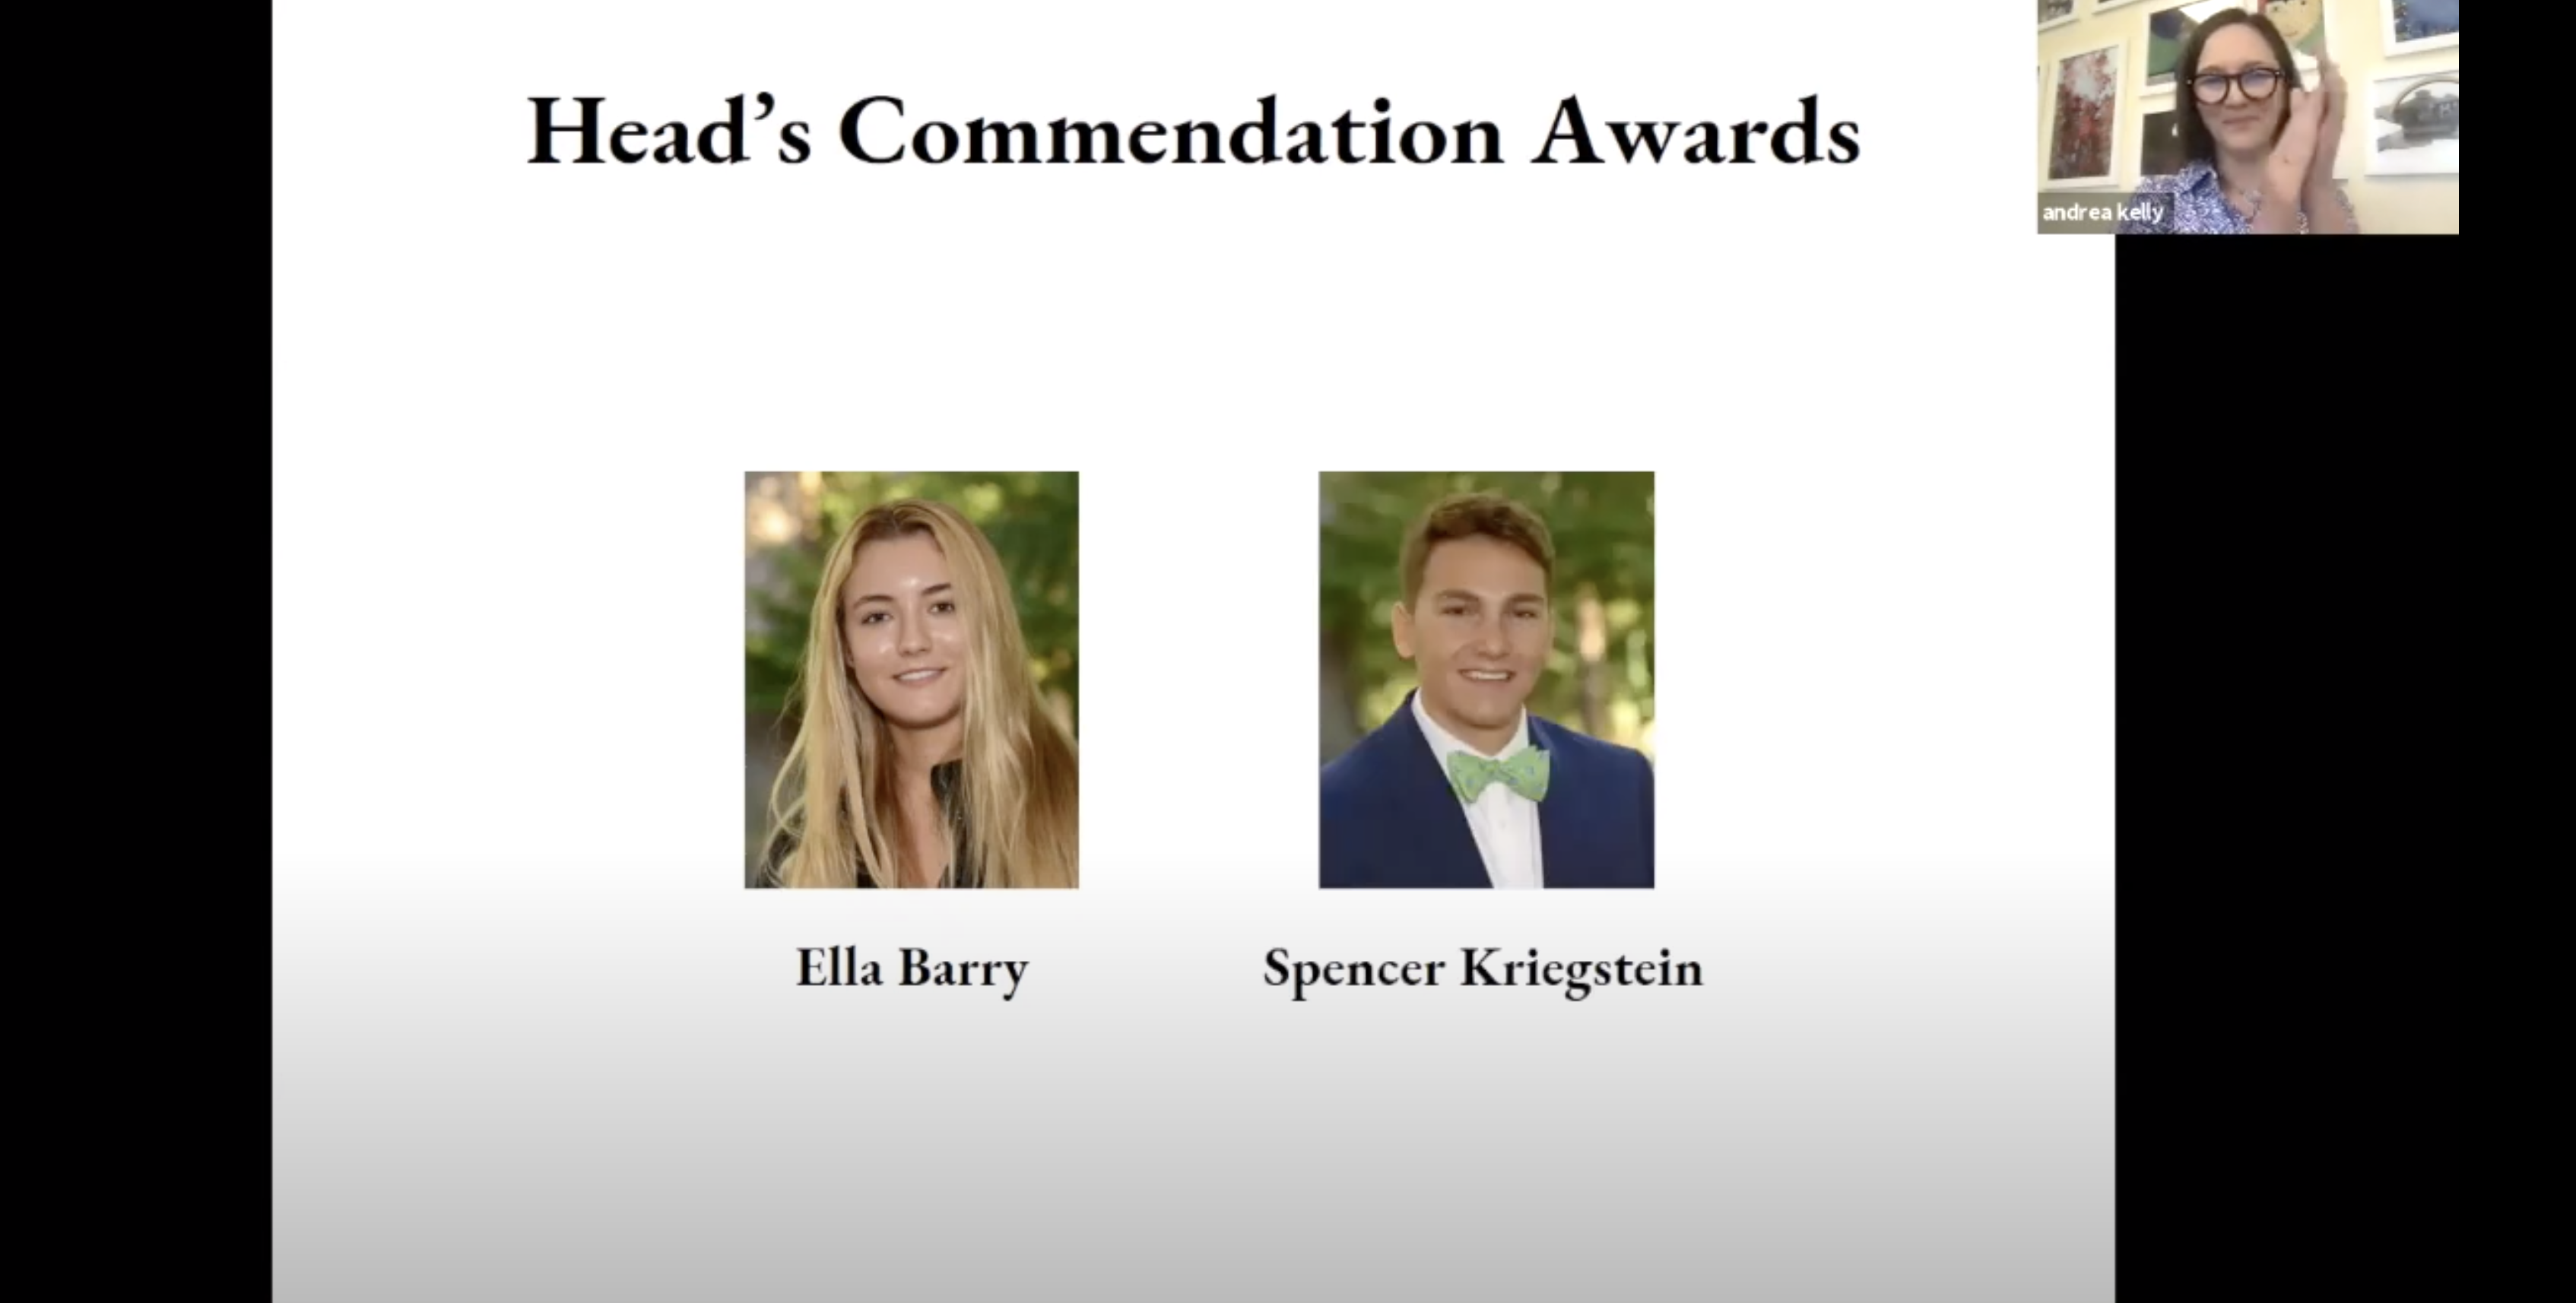 Head's Commendation Award winners